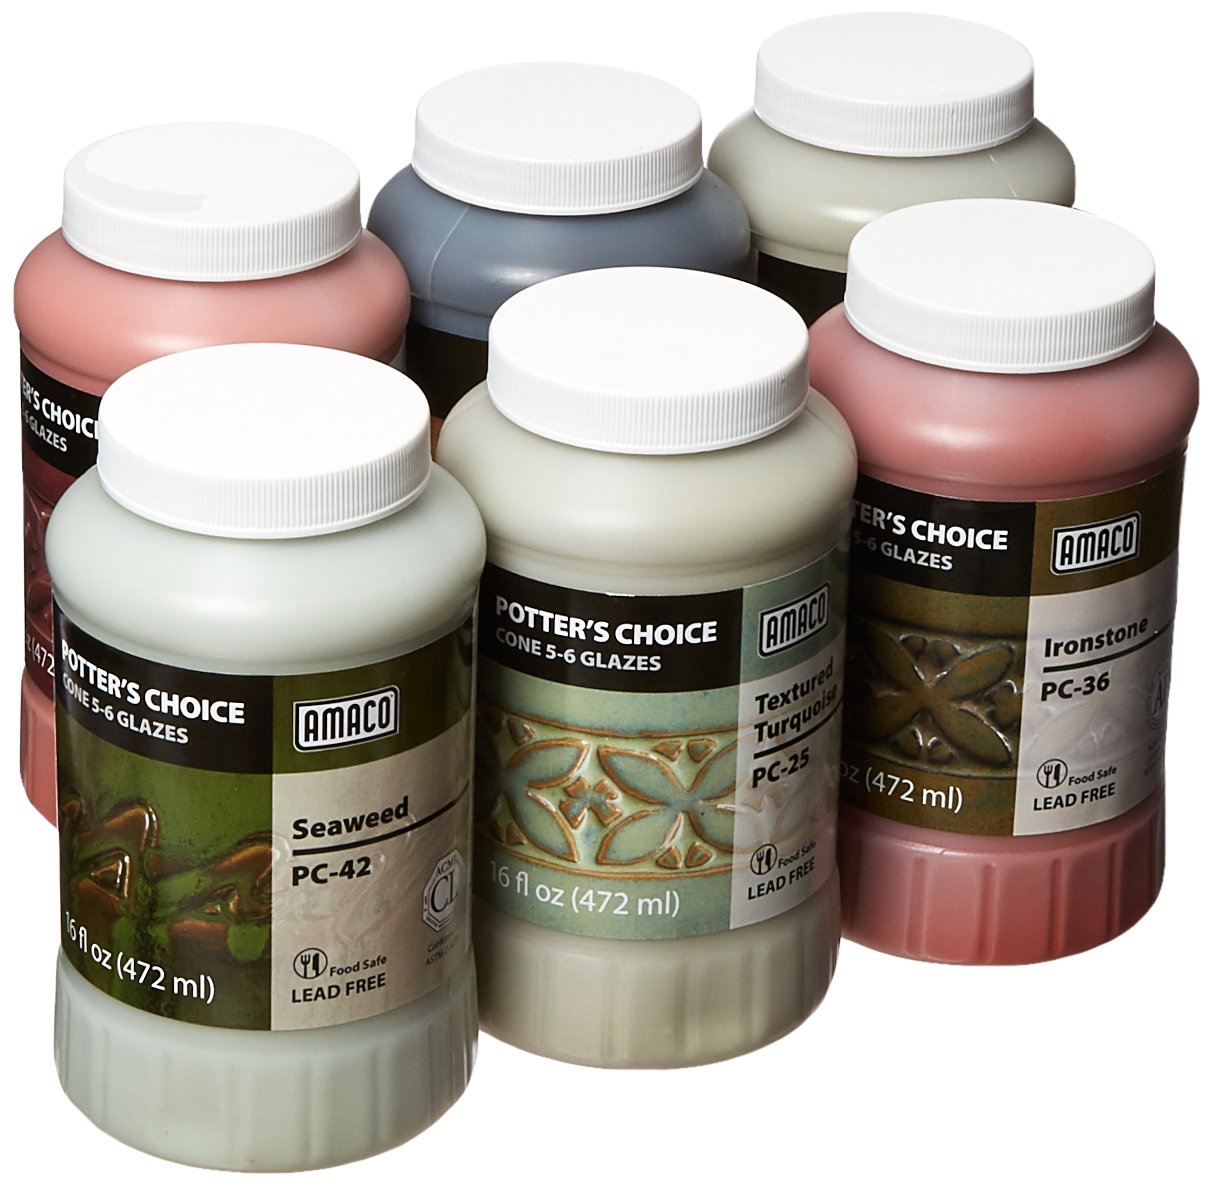 Set of 6 "Amaco Potter's Choice Glazes" bottles showcasing vibrant color options.